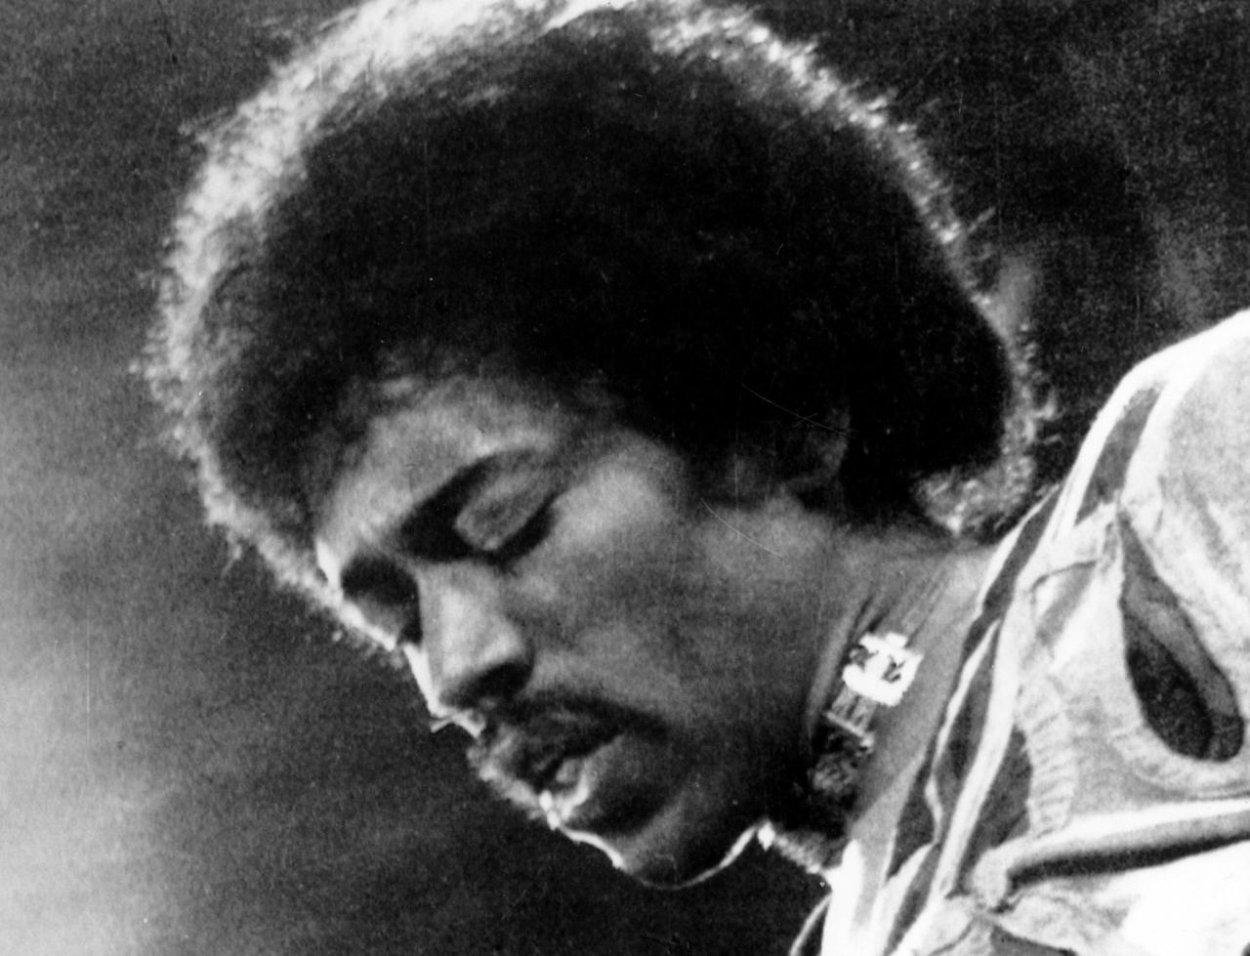 Jimi Hendrix by sa dnes dožil osemdesiatky